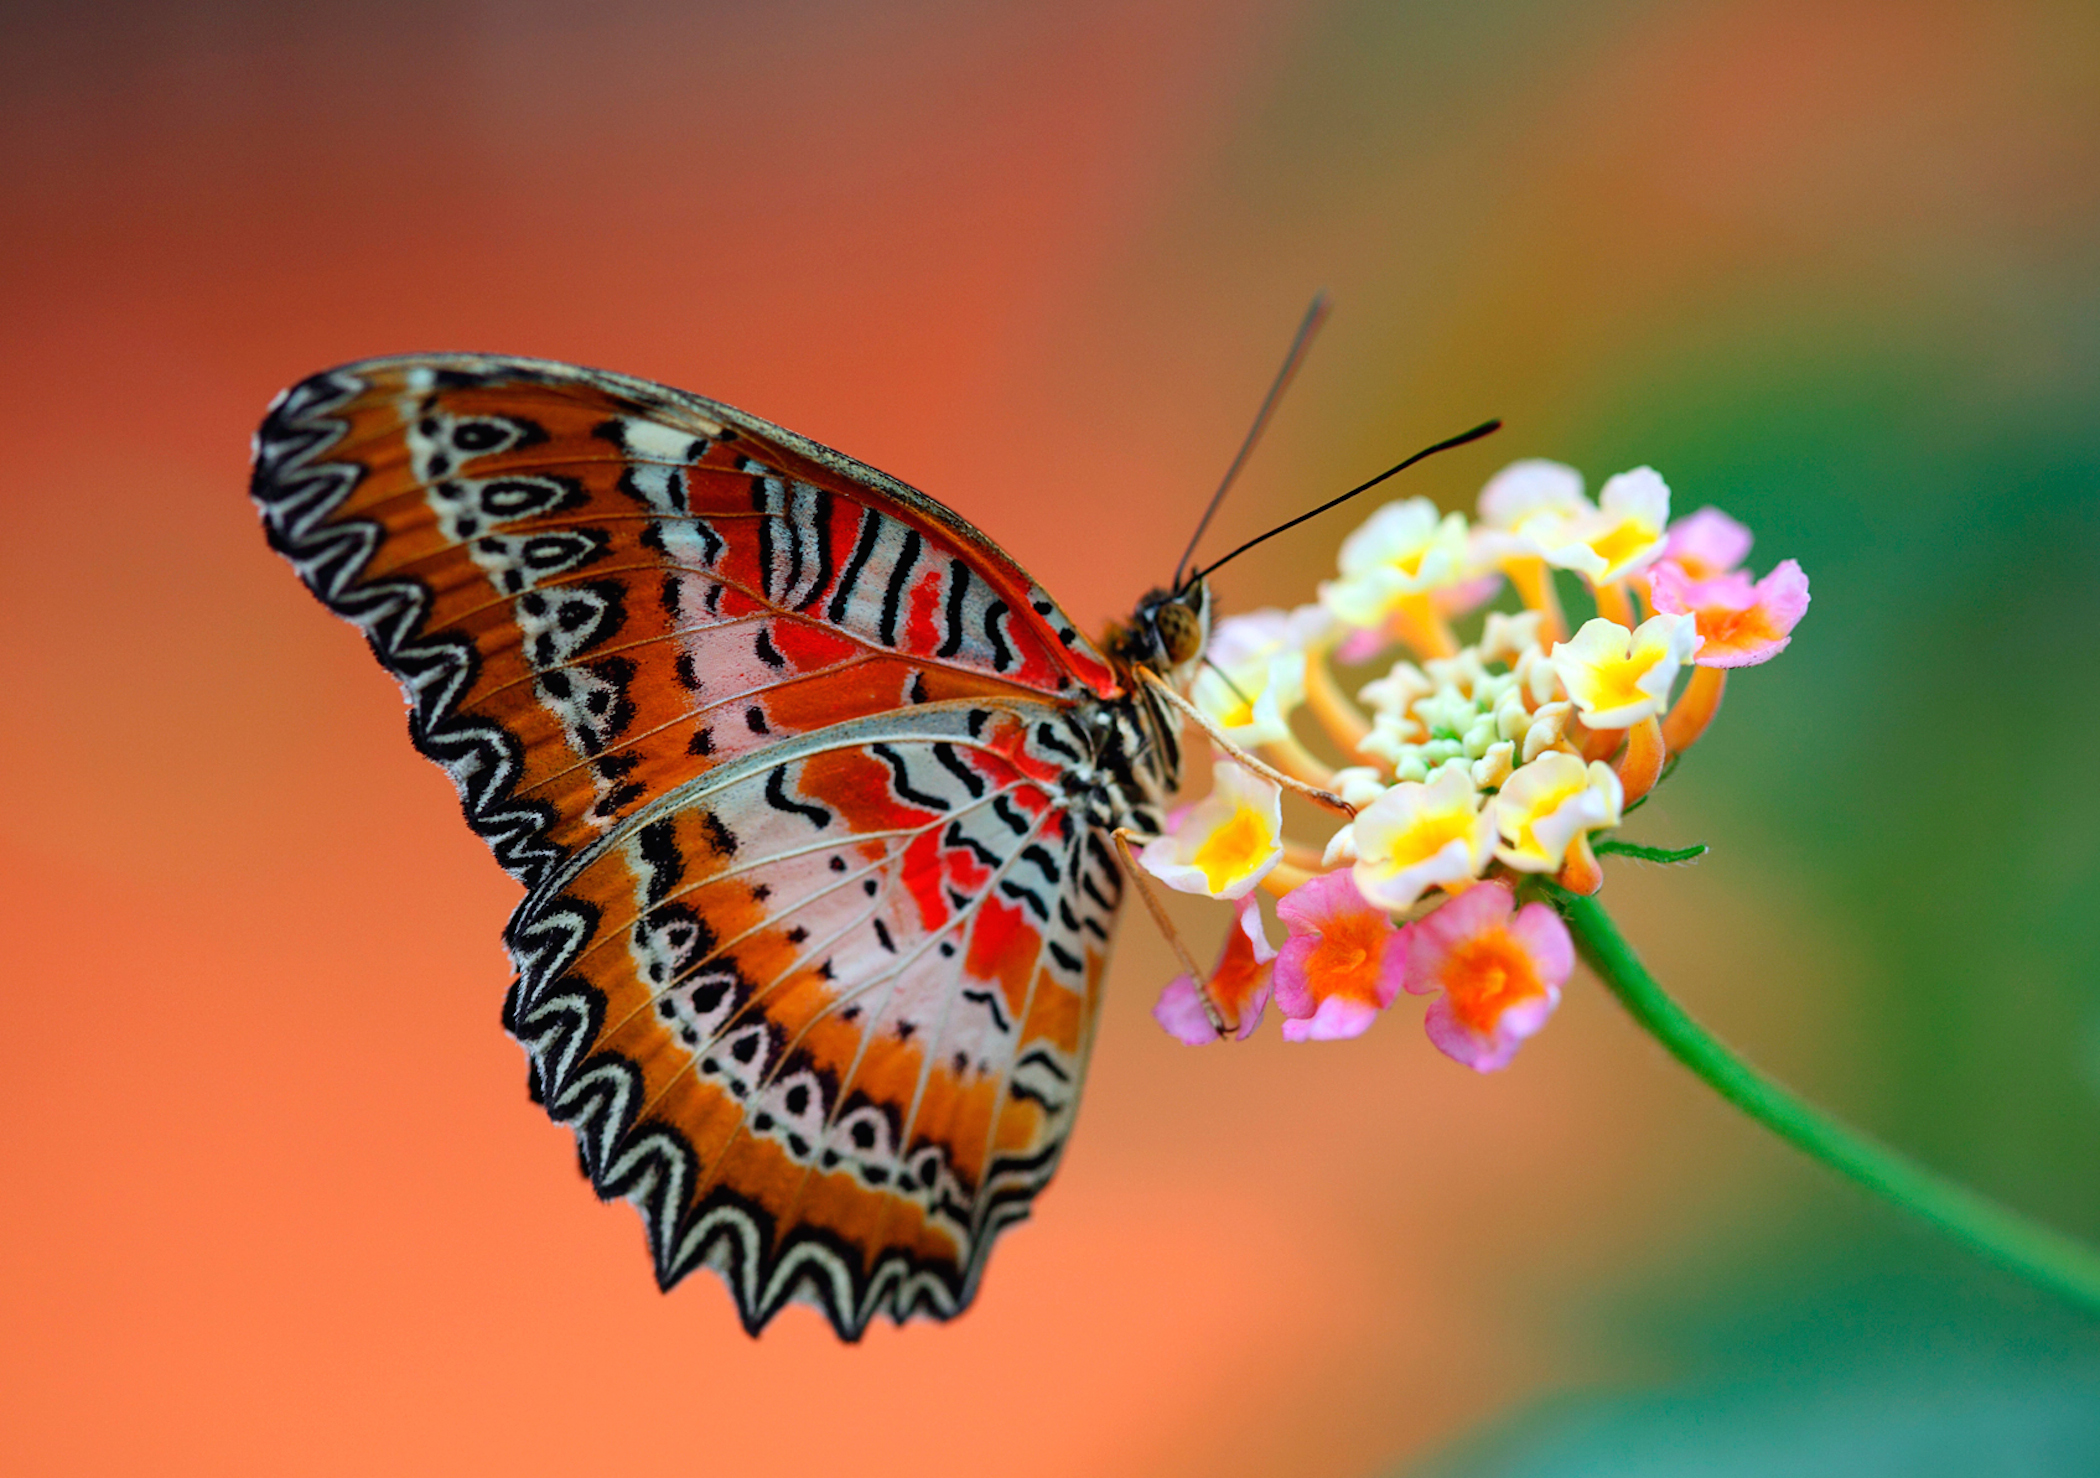 Flower Attracts Butterfly Wallpaper - Free HD Downloads